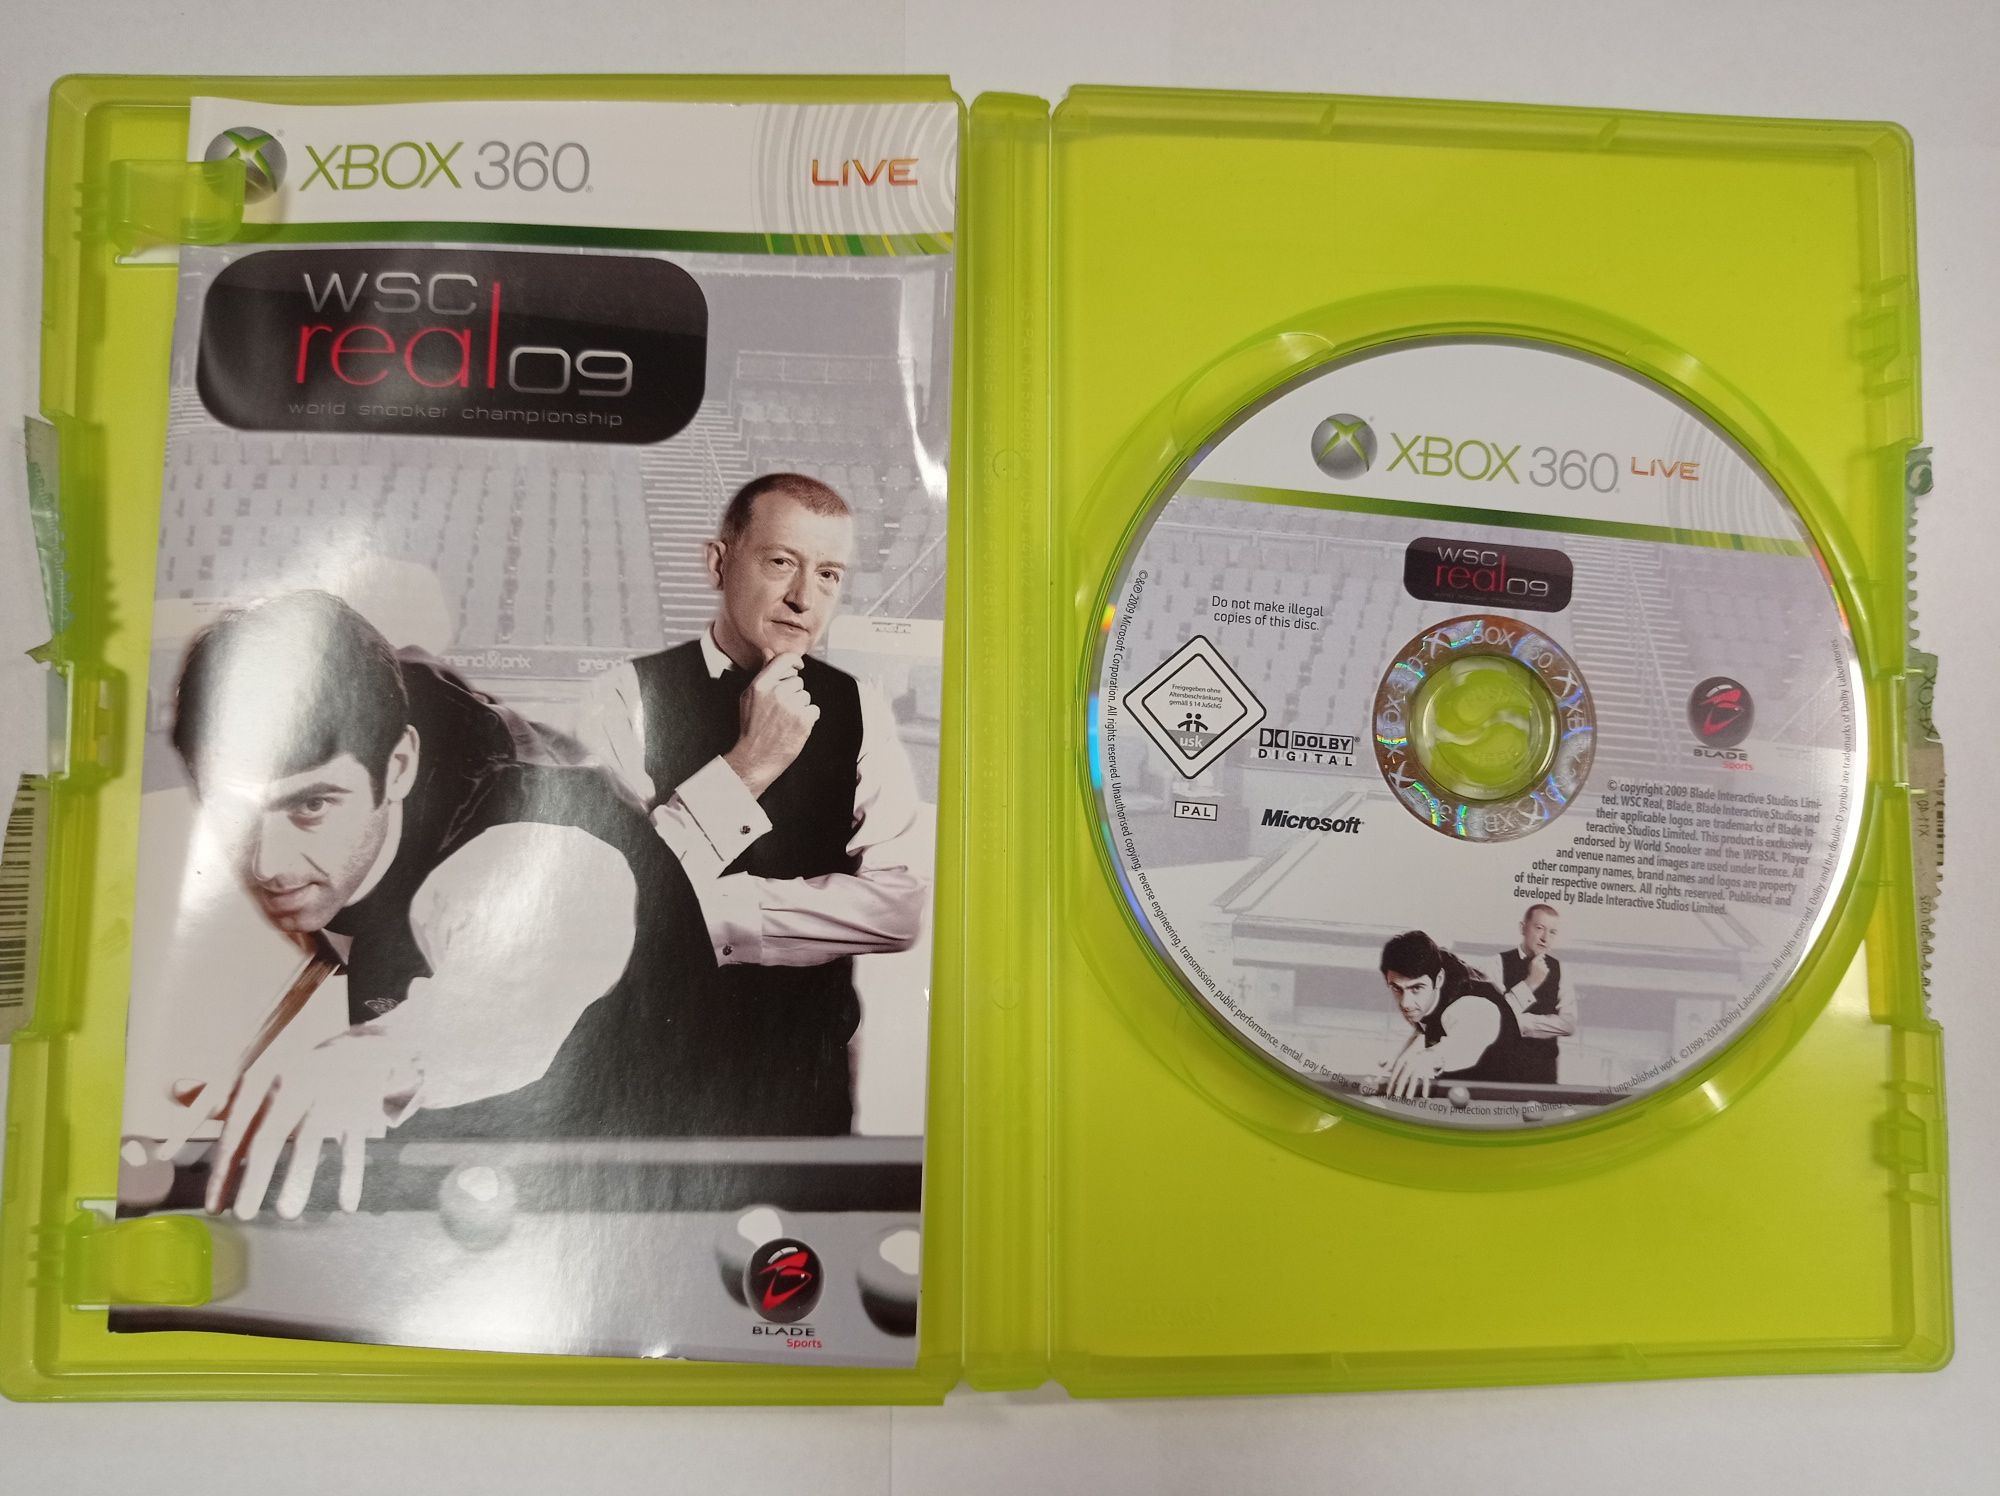 gra Xbox 360 "WSC Snooker Real 09"